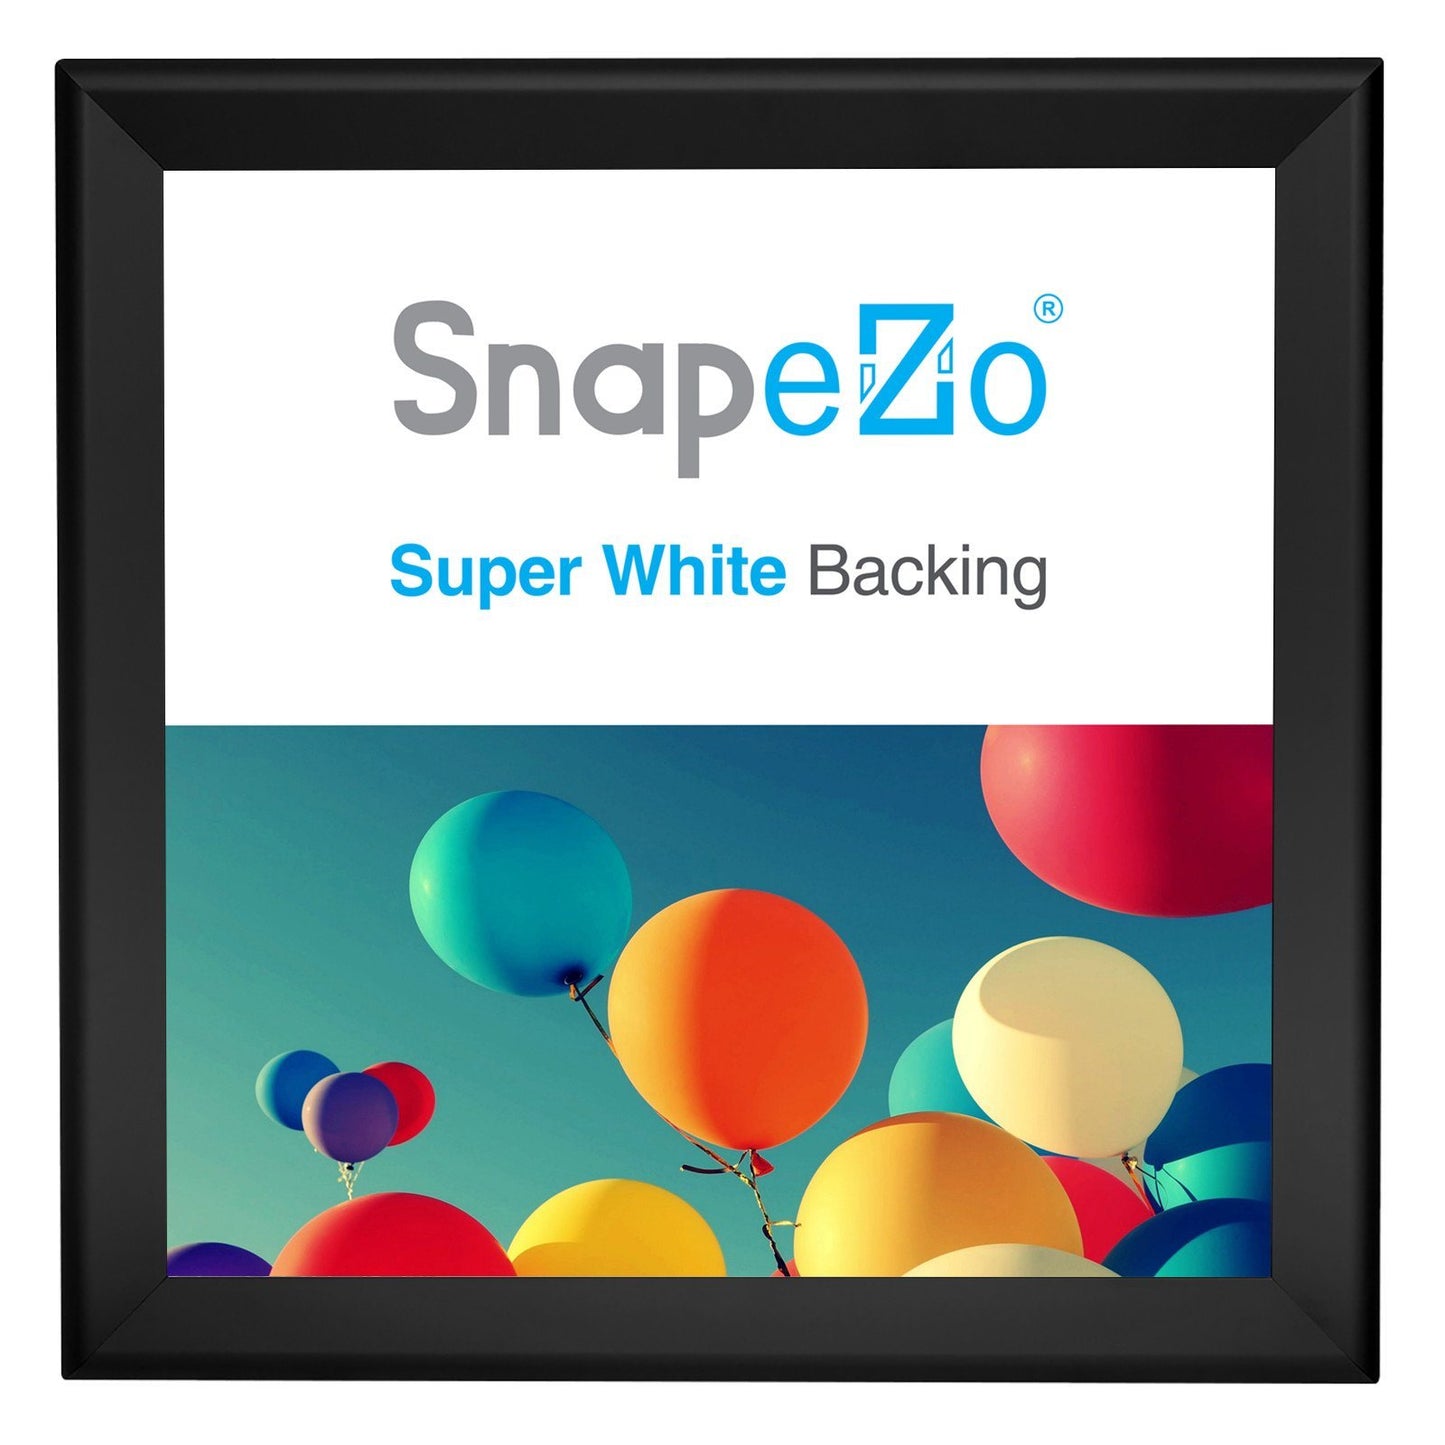 36x36 Black SnapeZo® Snap Frame - 1.7" Profile